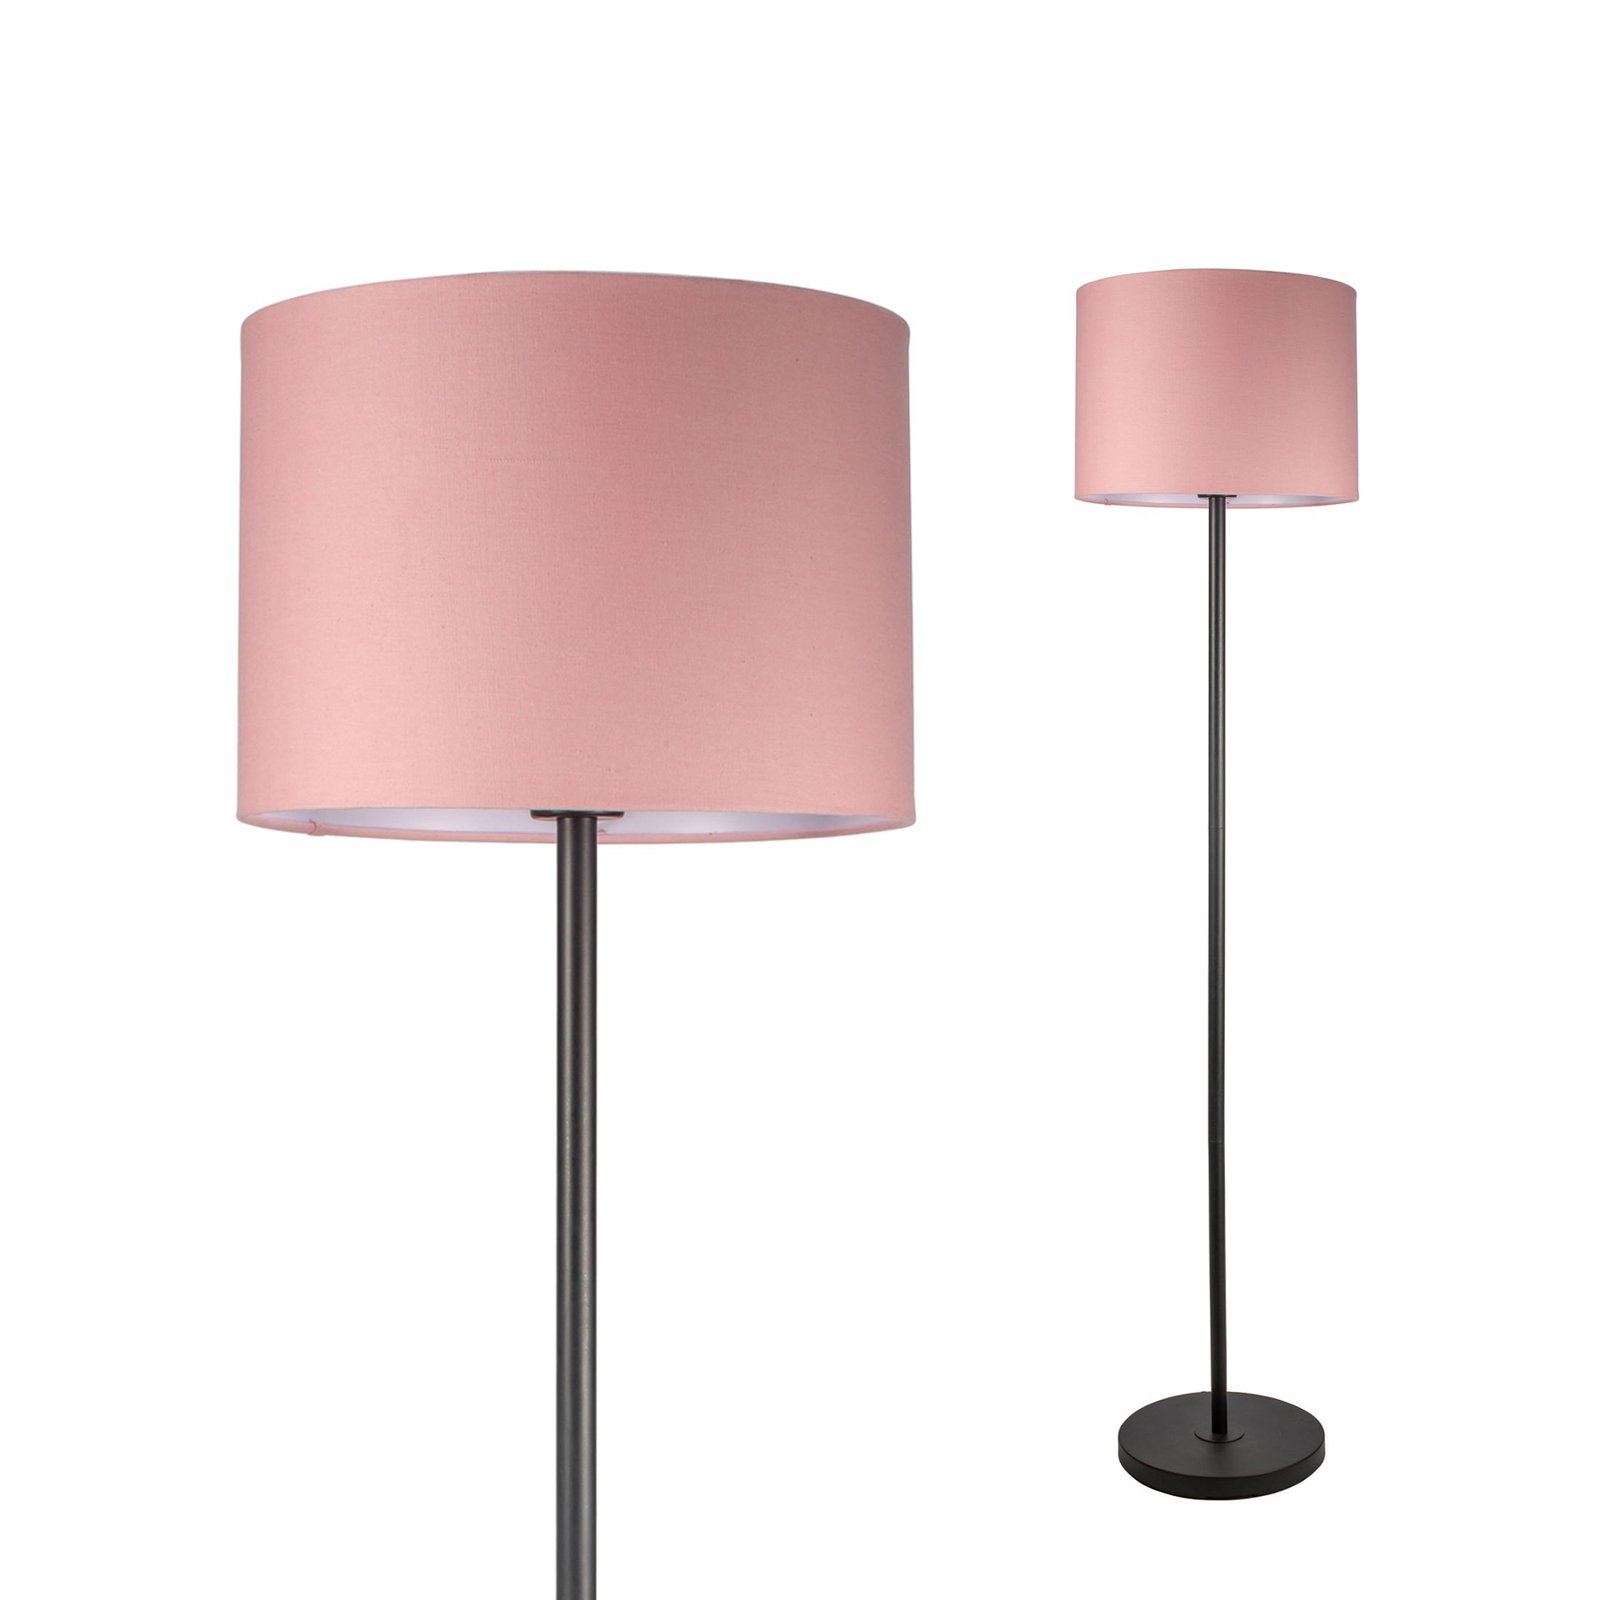 Pauleen Grand Reverie lampa stojąca różowa/czarna